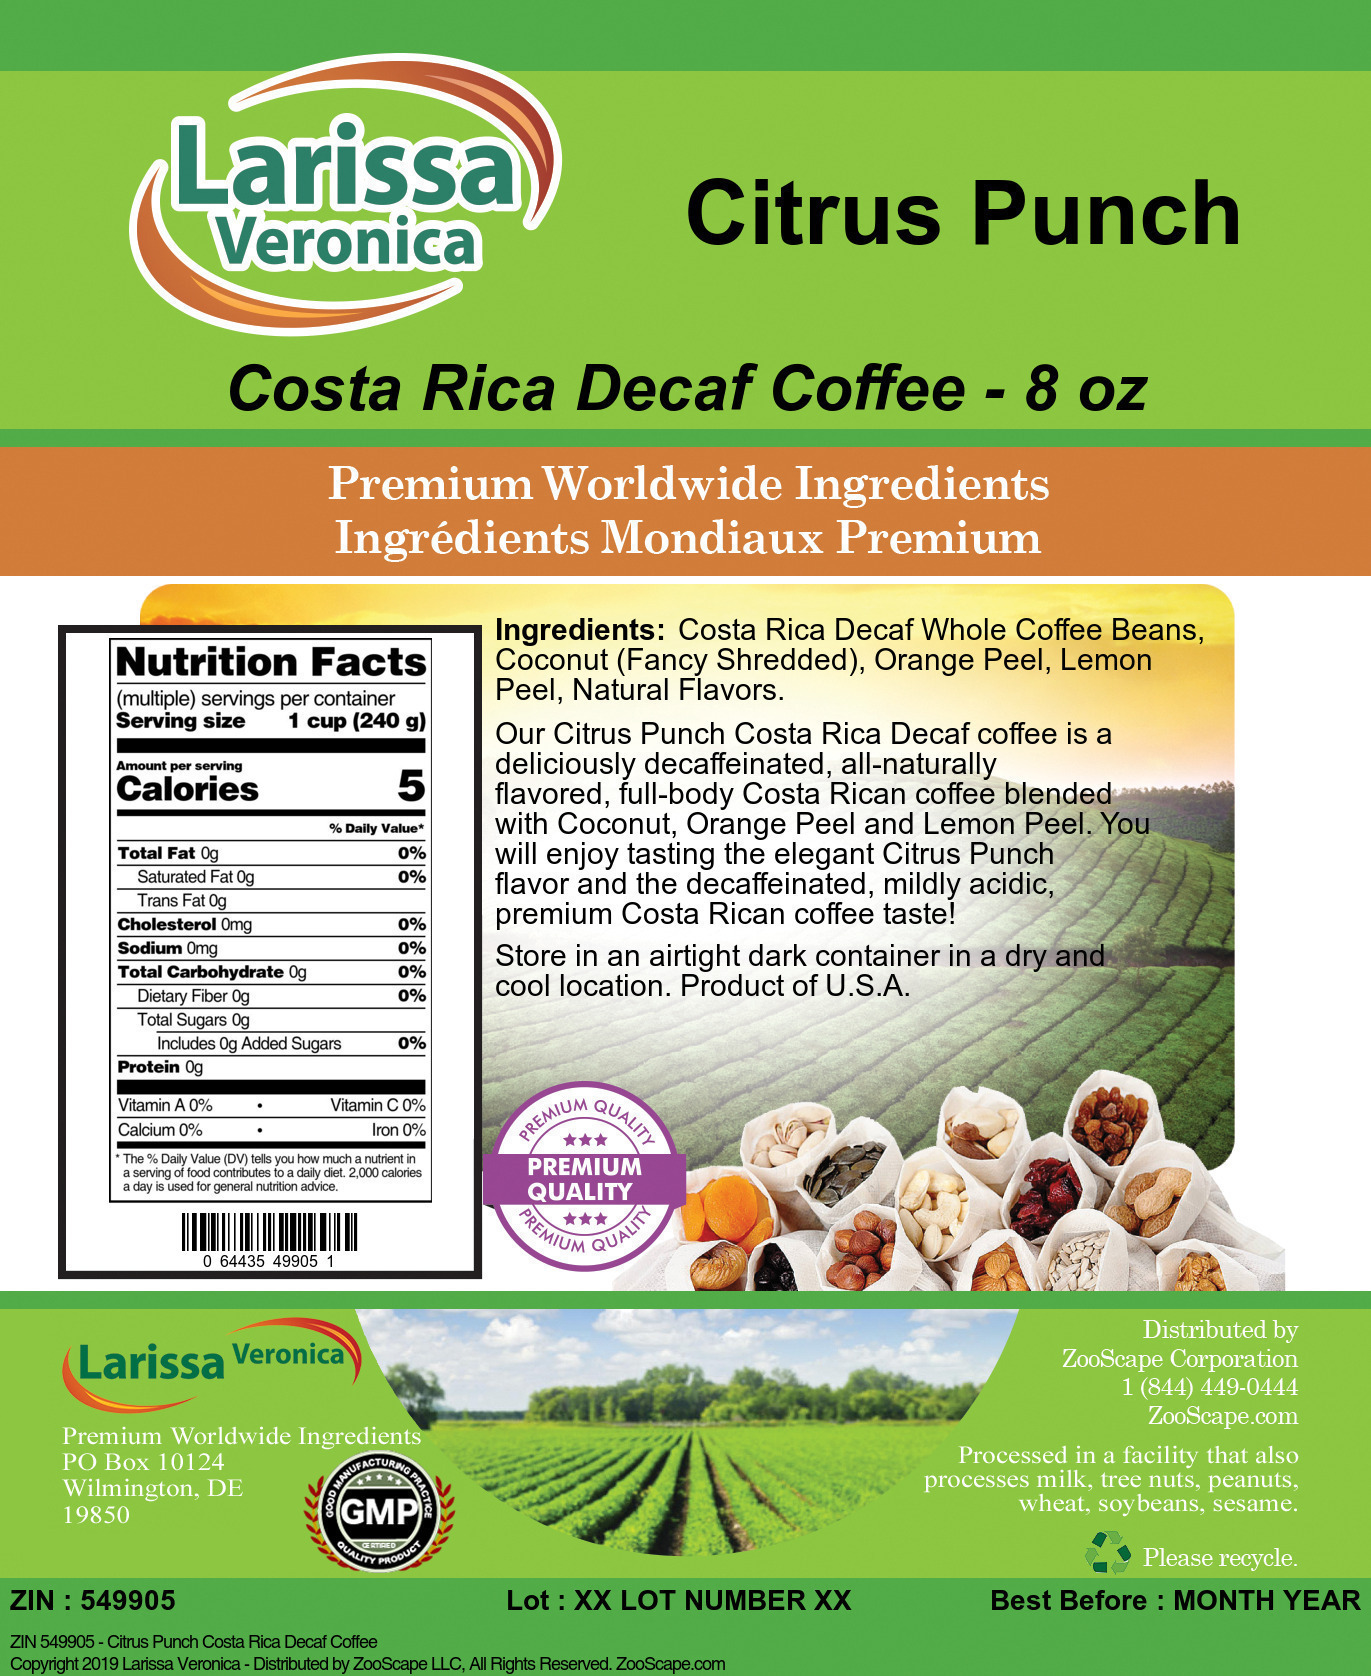 Citrus Punch Costa Rica Decaf Coffee - Label